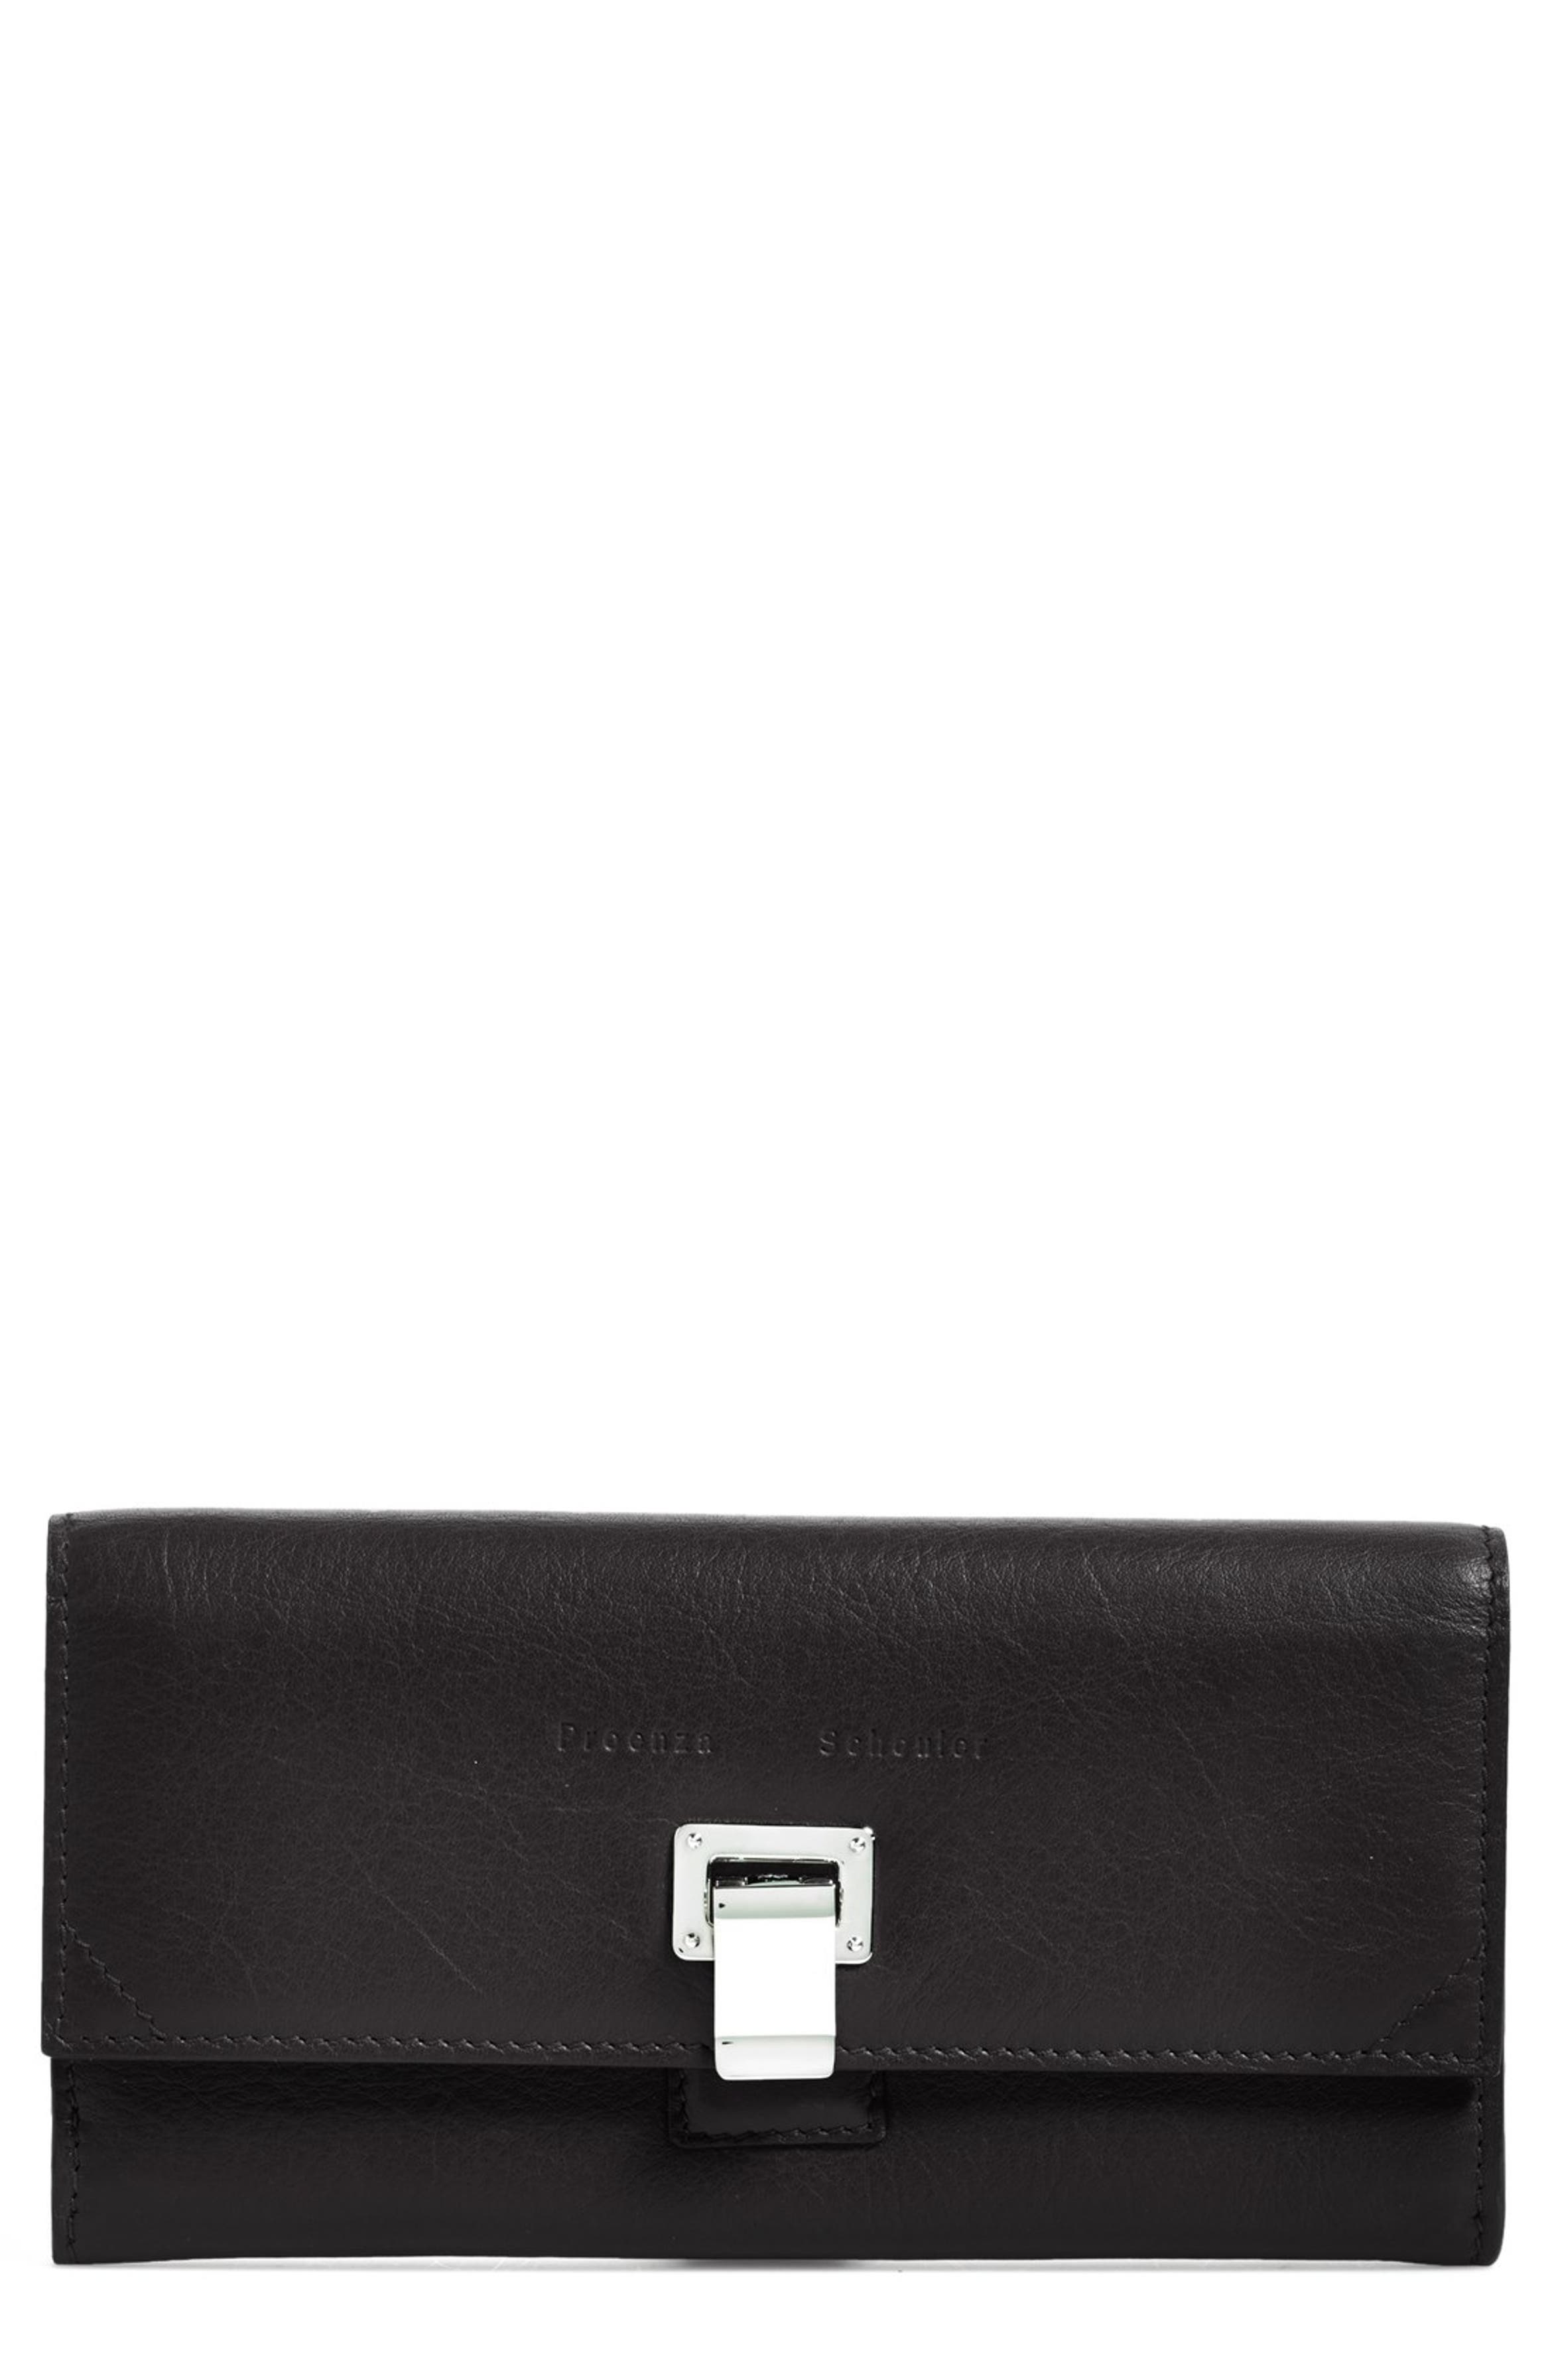 Proenza Schouler 'Courier' Leather Wallet | Nordstrom